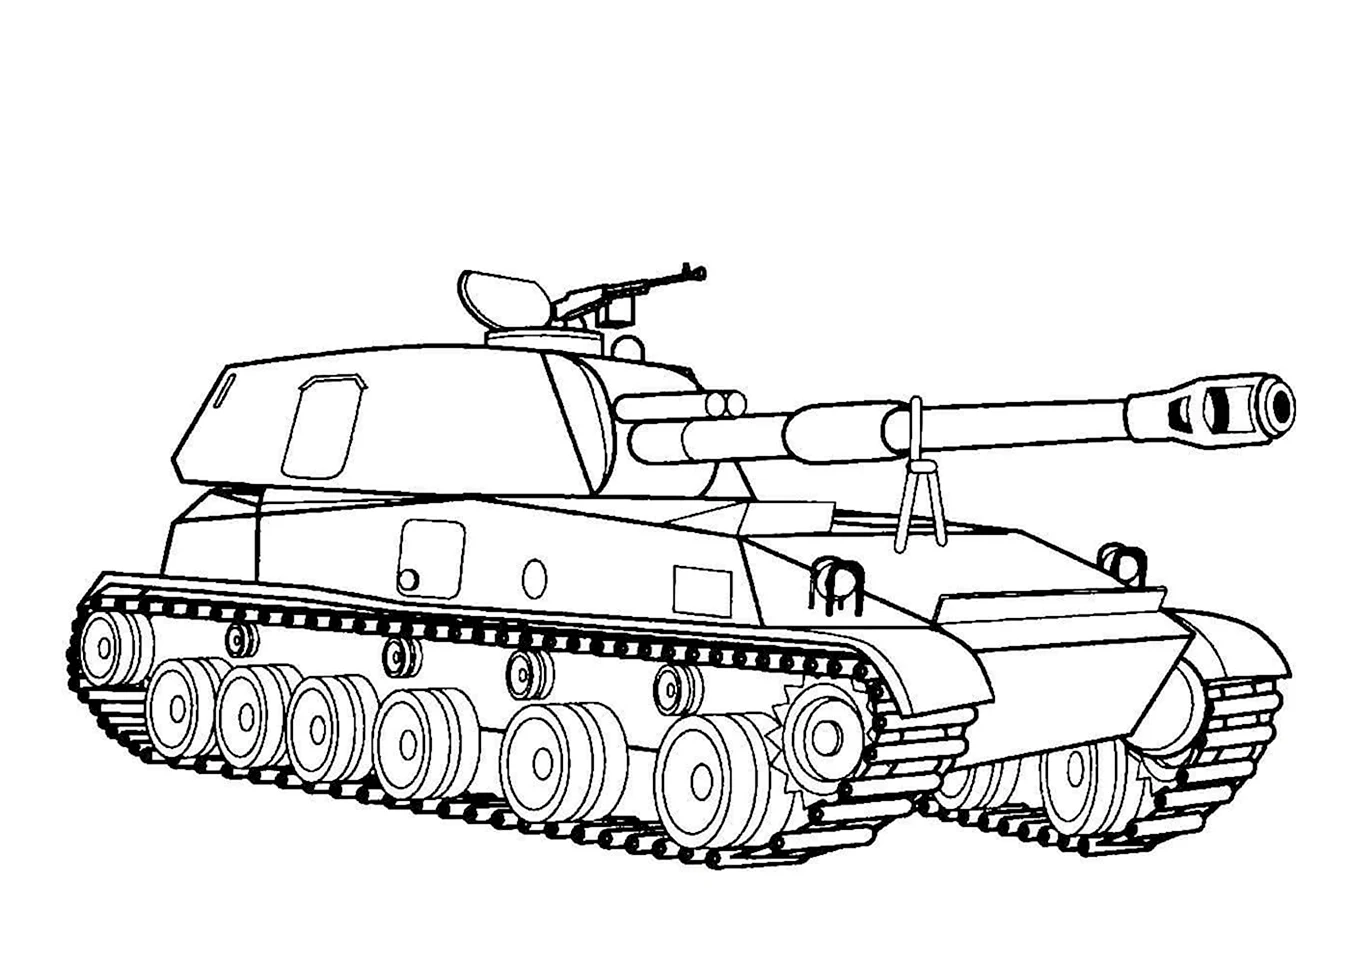 Раскраска танк кв 4